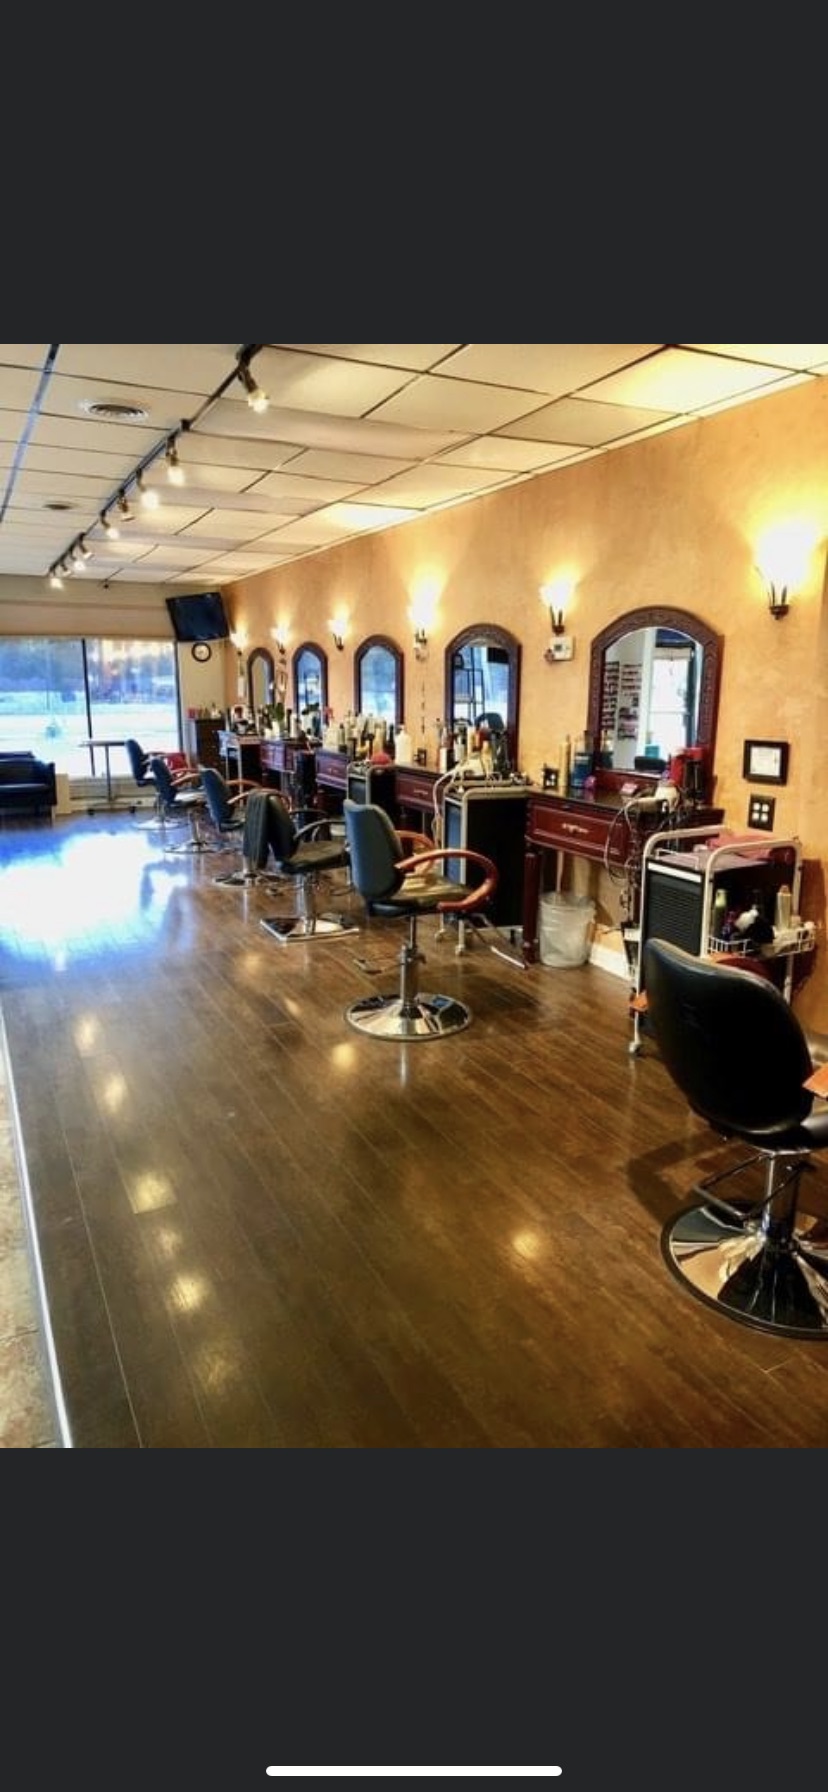 Taylor Nicole Hair Salon & Spa 10035 S Roberts Rd, Palos Hills Illinois 60465